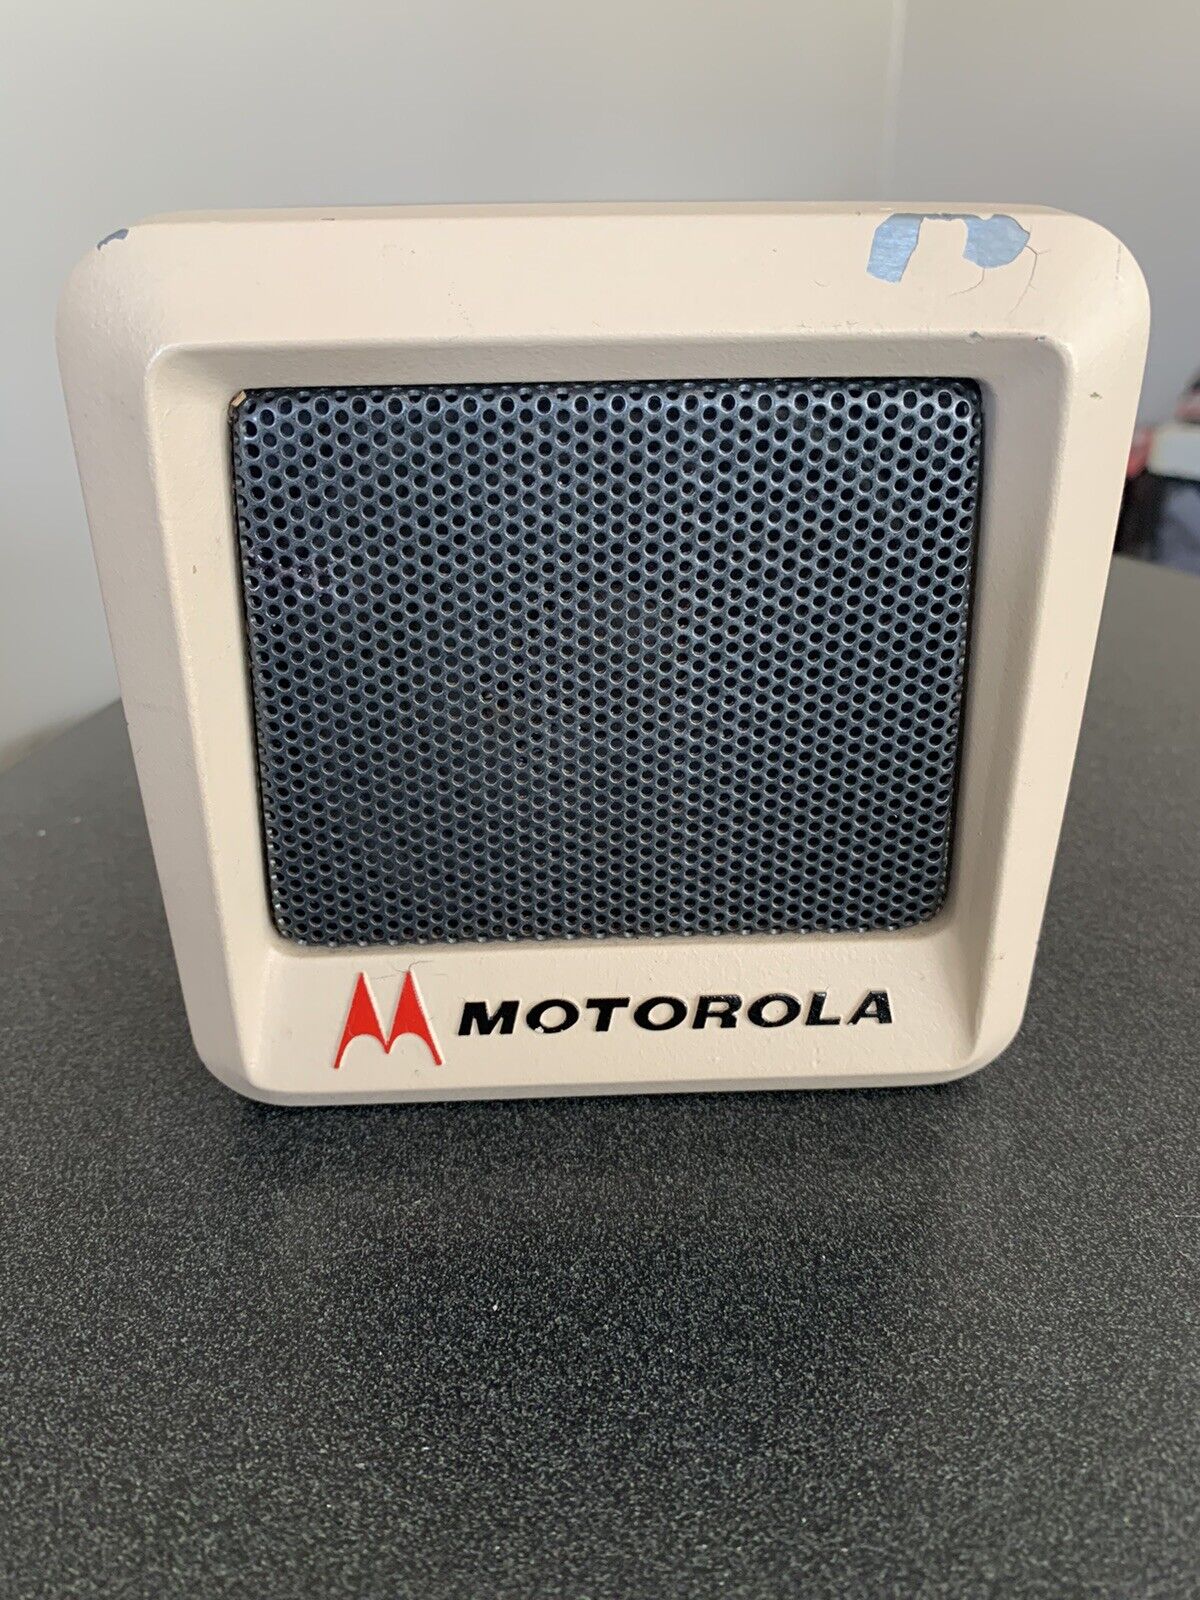 Motorola vintage speaker - model #TSN6006A with volume Control, Tested Works